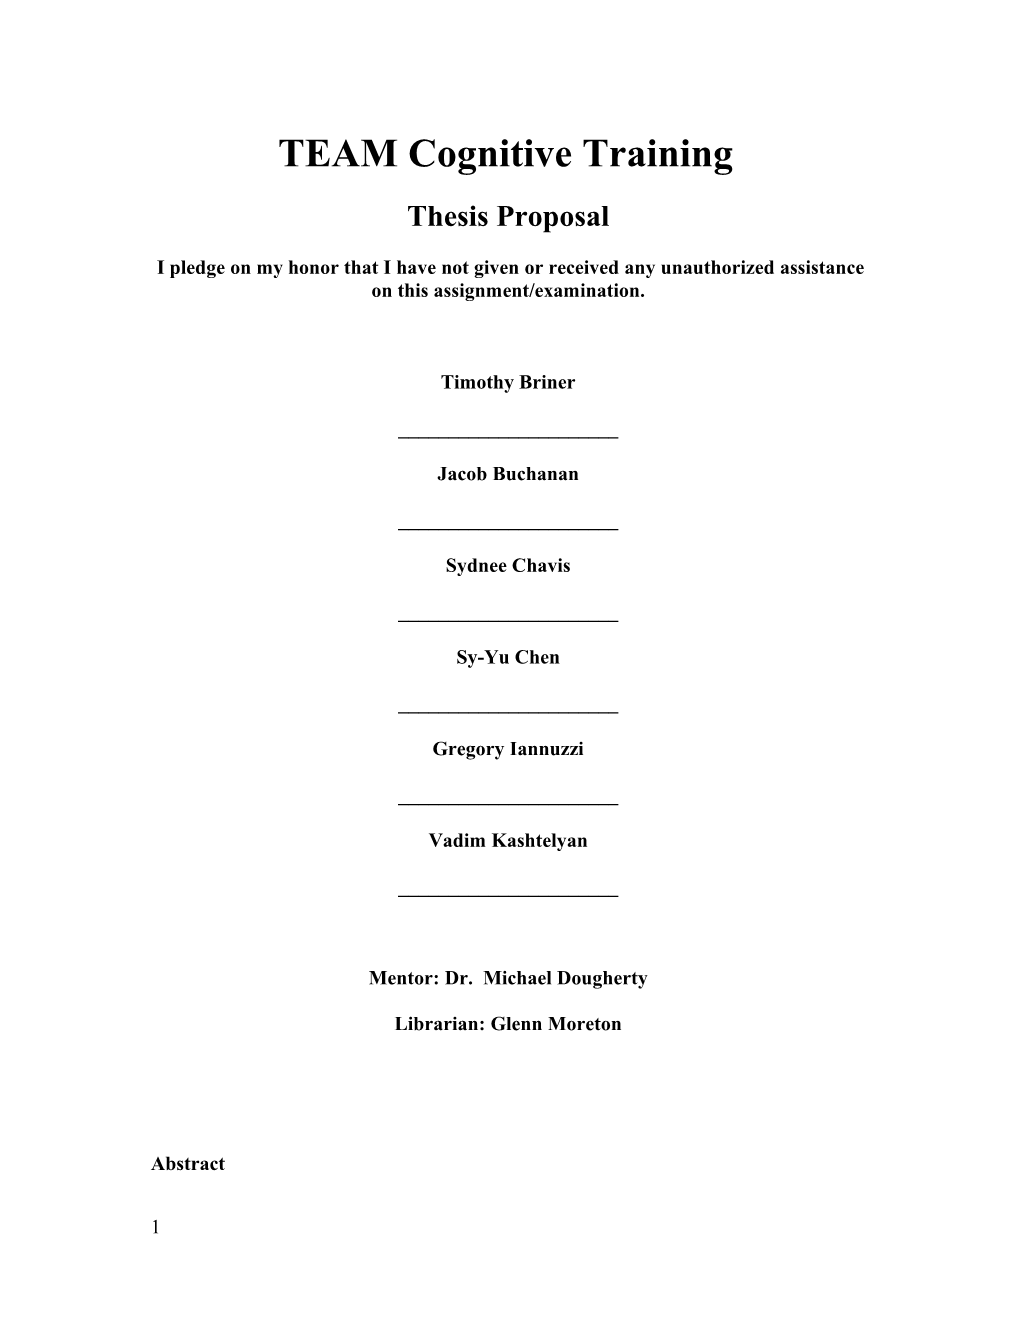 TEAM Cognitive Training